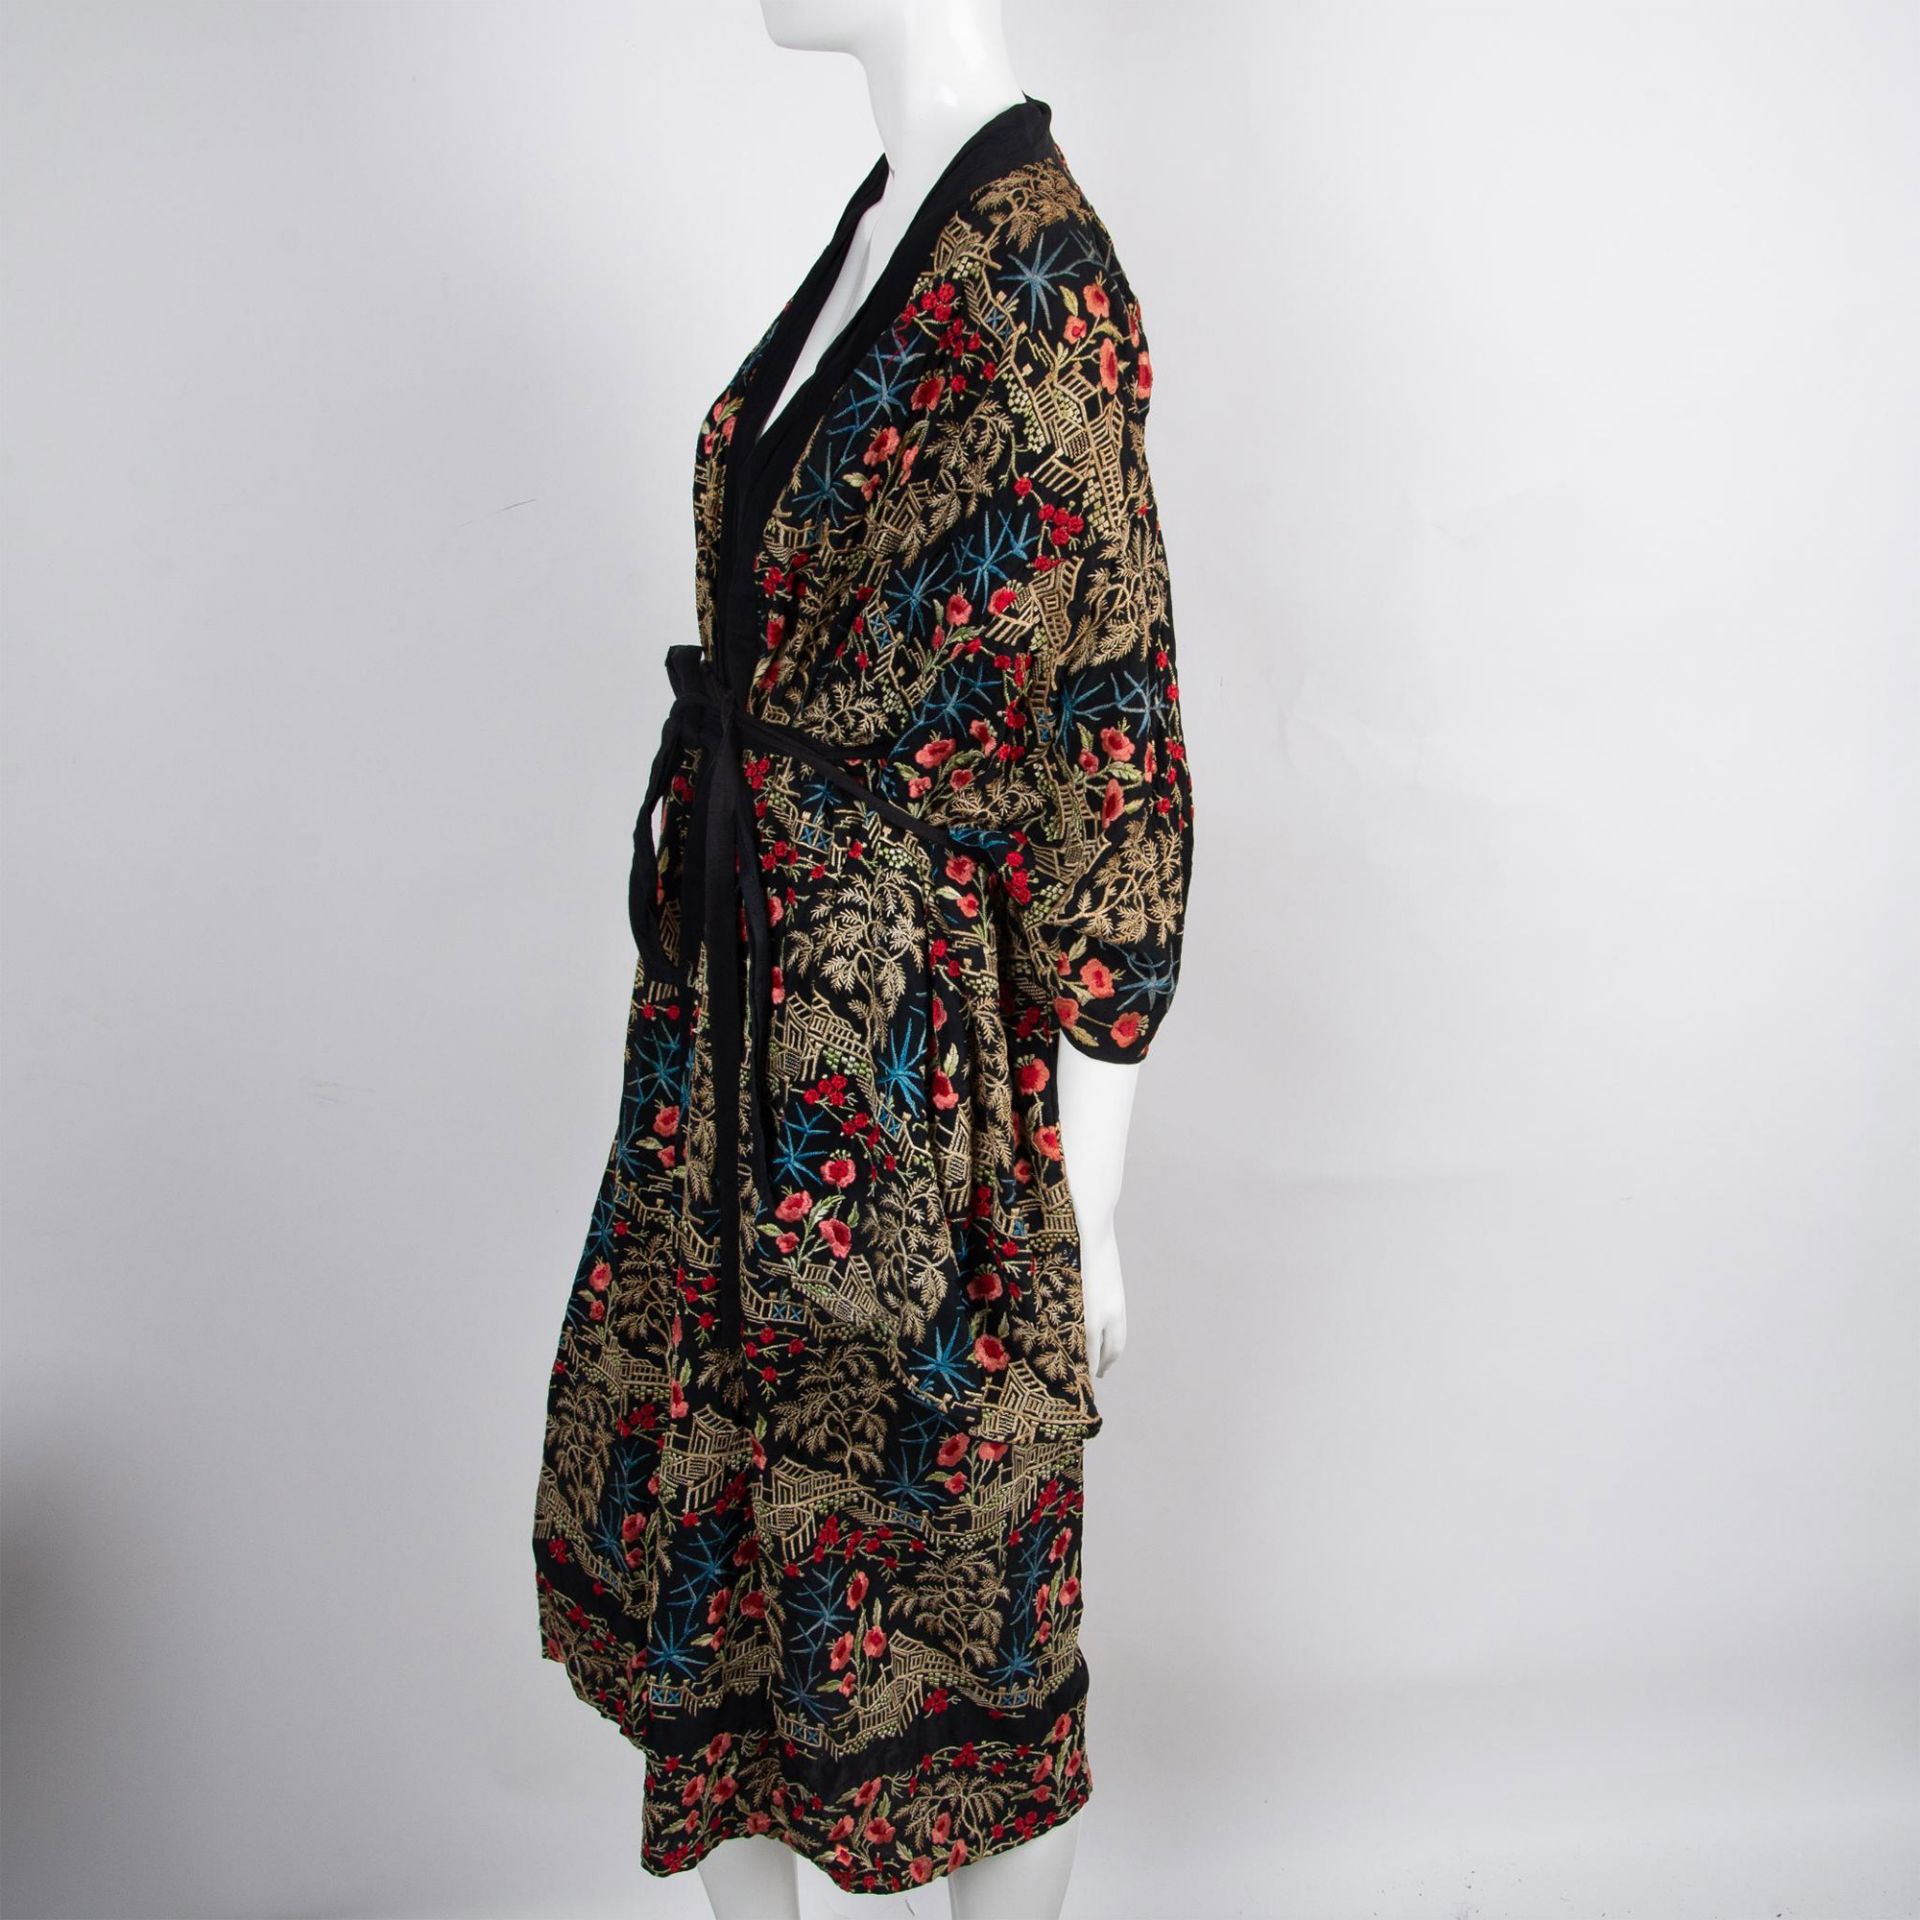 Japanese Embroidered Robe, Size Medium - Image 4 of 8